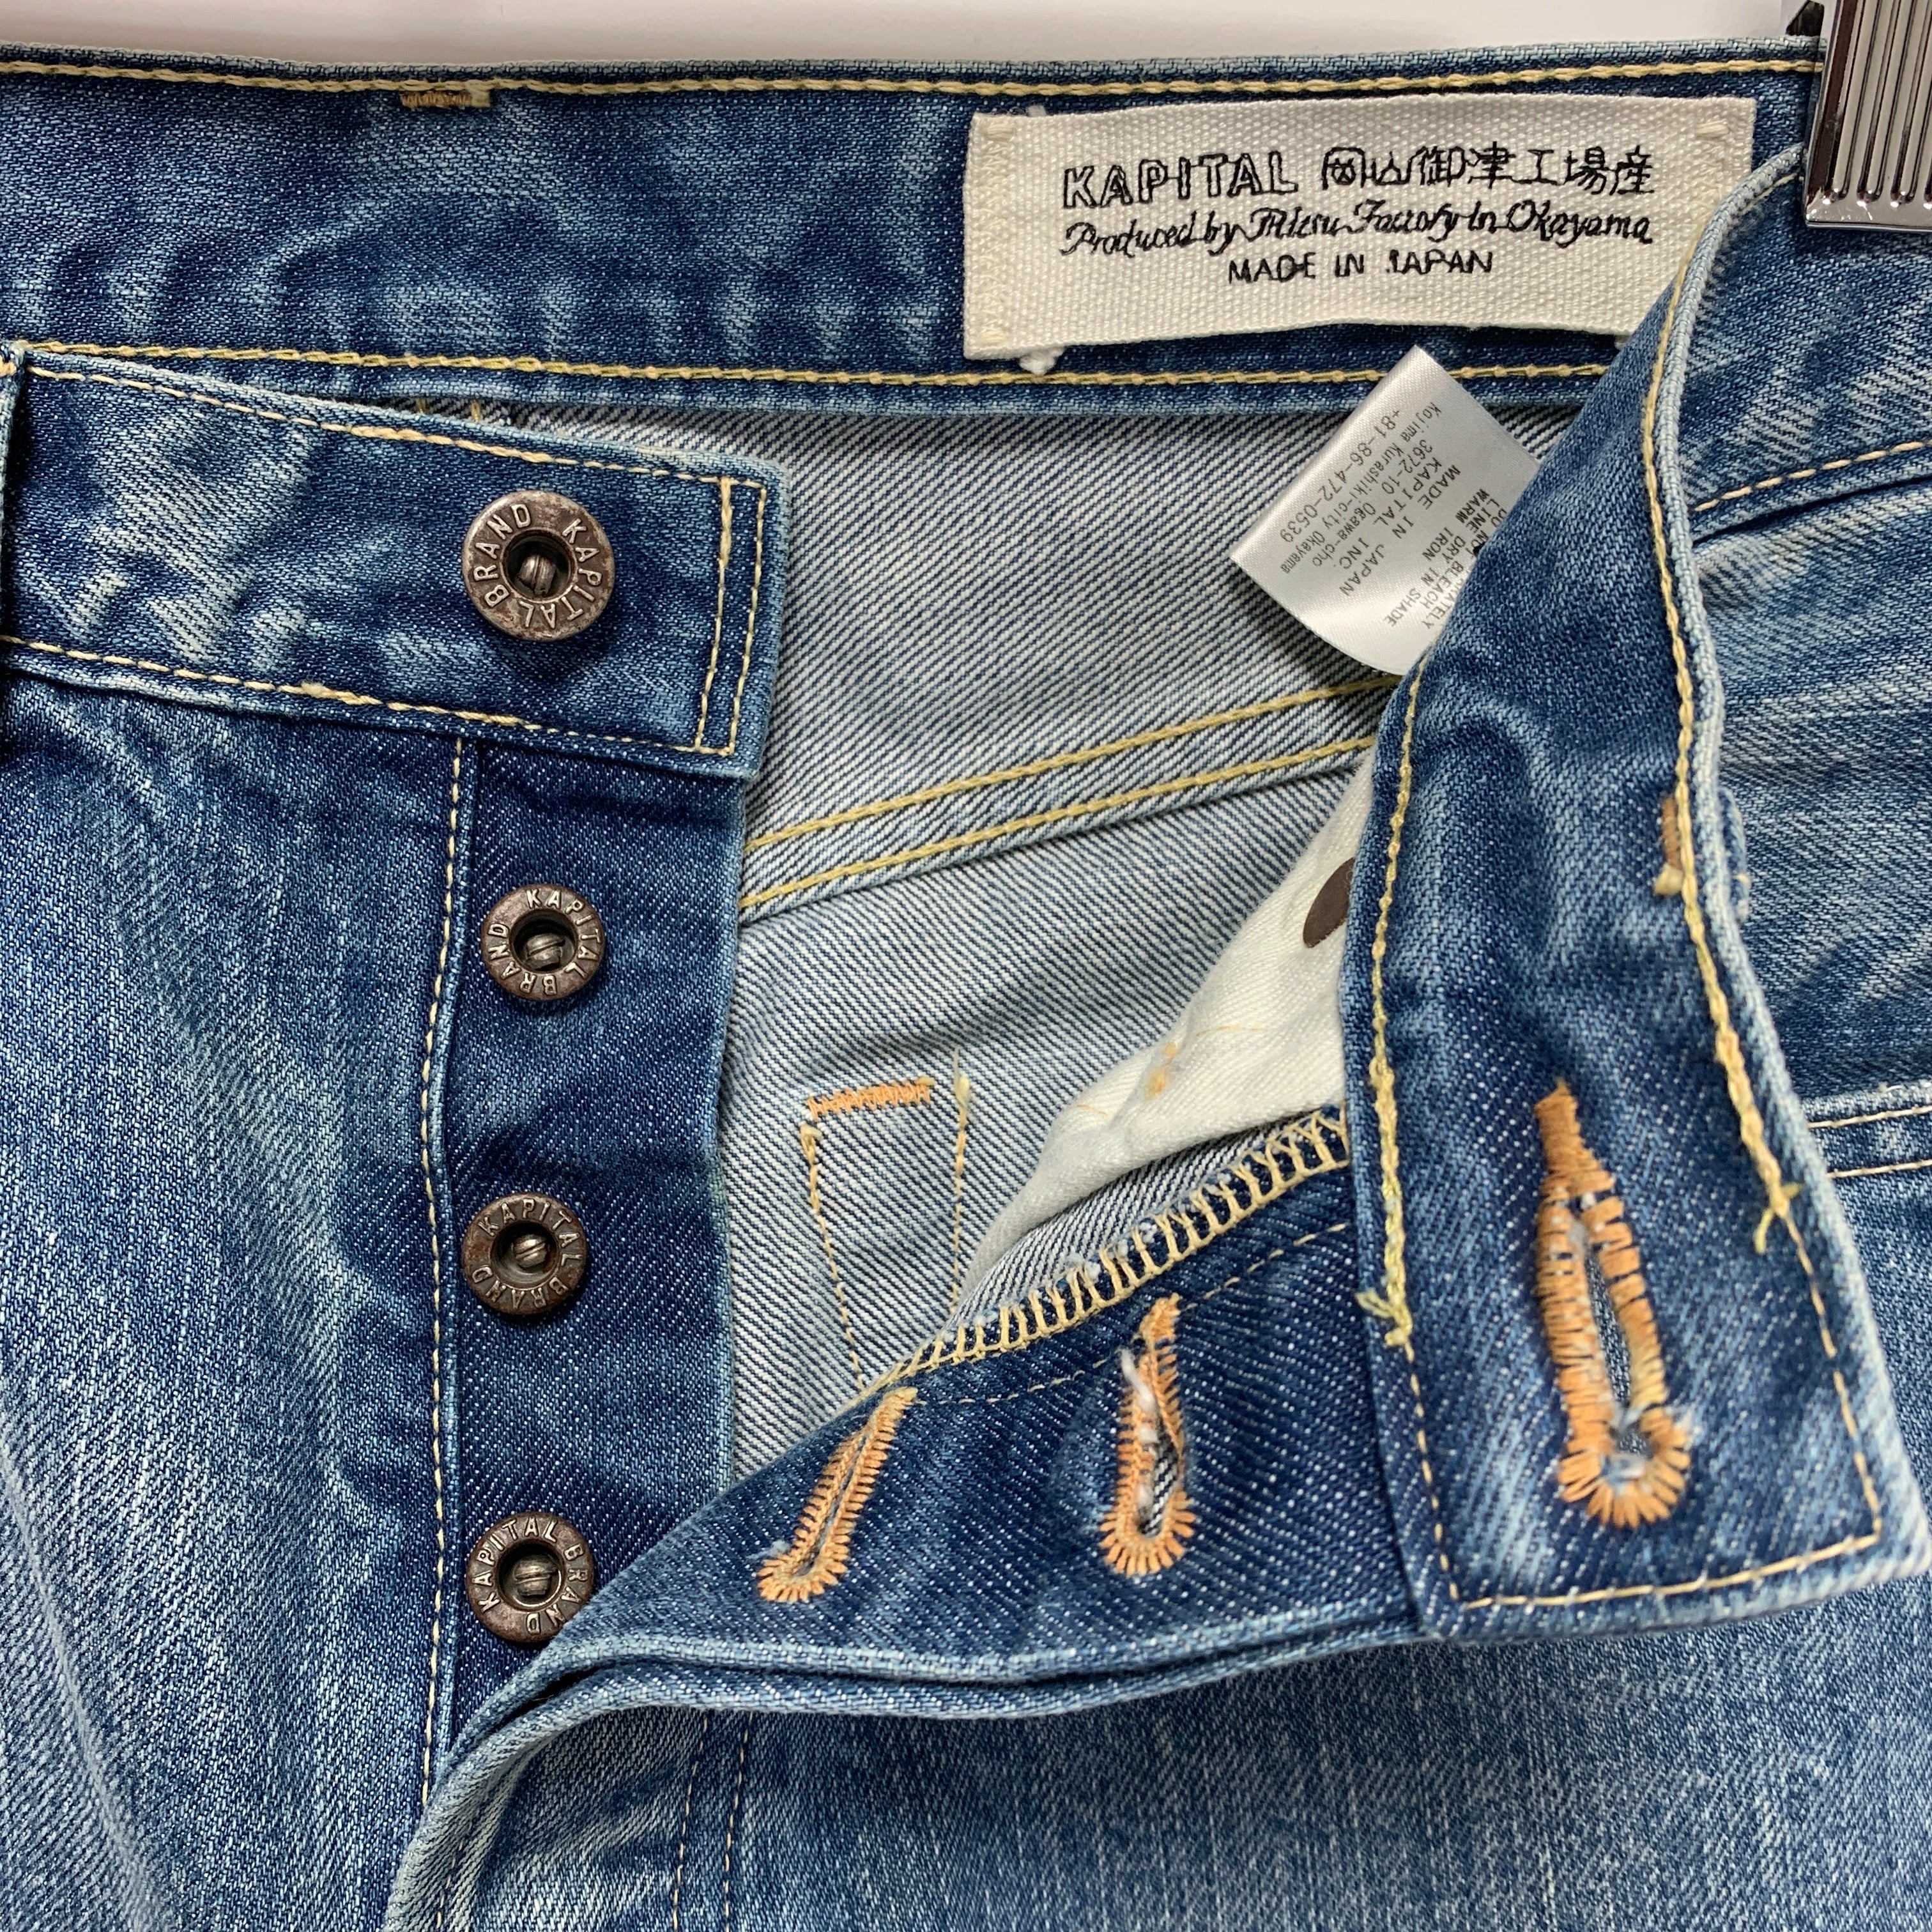 32] Kapital Okayama DFKL Washed Indigo Denim Jeans 